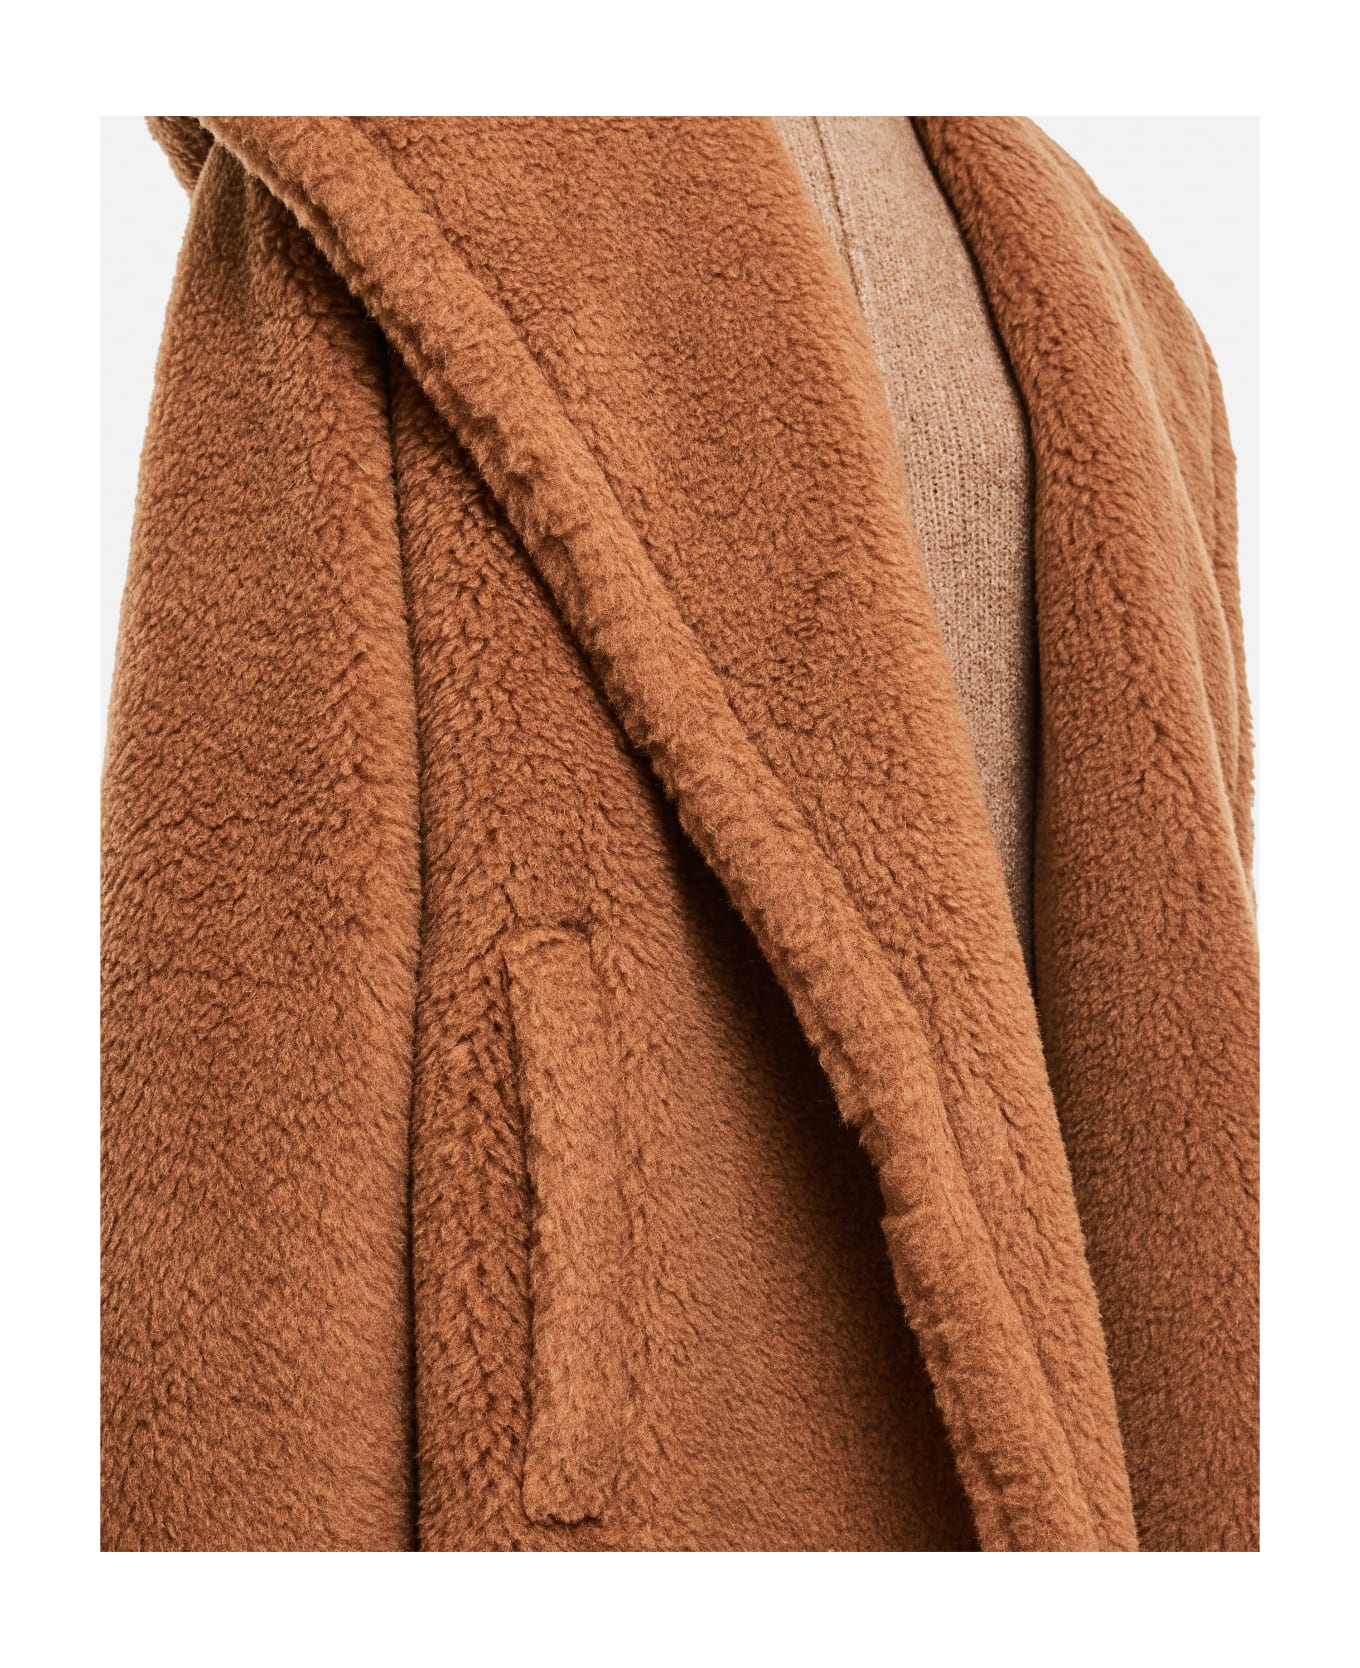 Max Mara Apogeo Coat In Camel - Brown コート